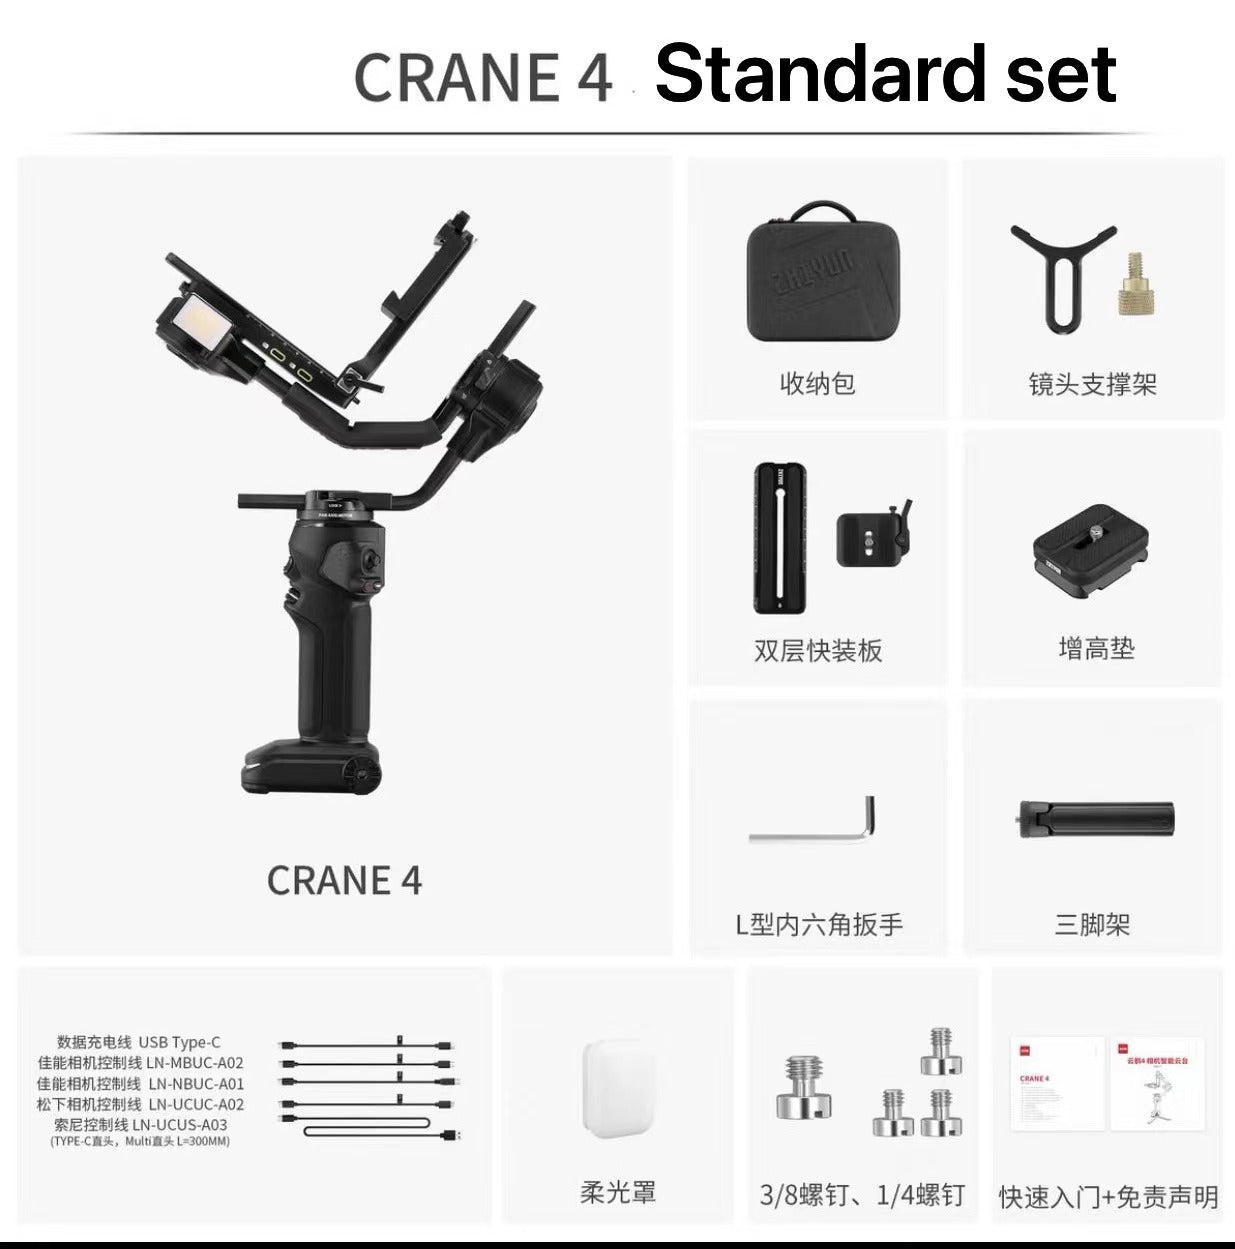 ZHIYUN Crane 4 professional camera Gimbal stabilizer